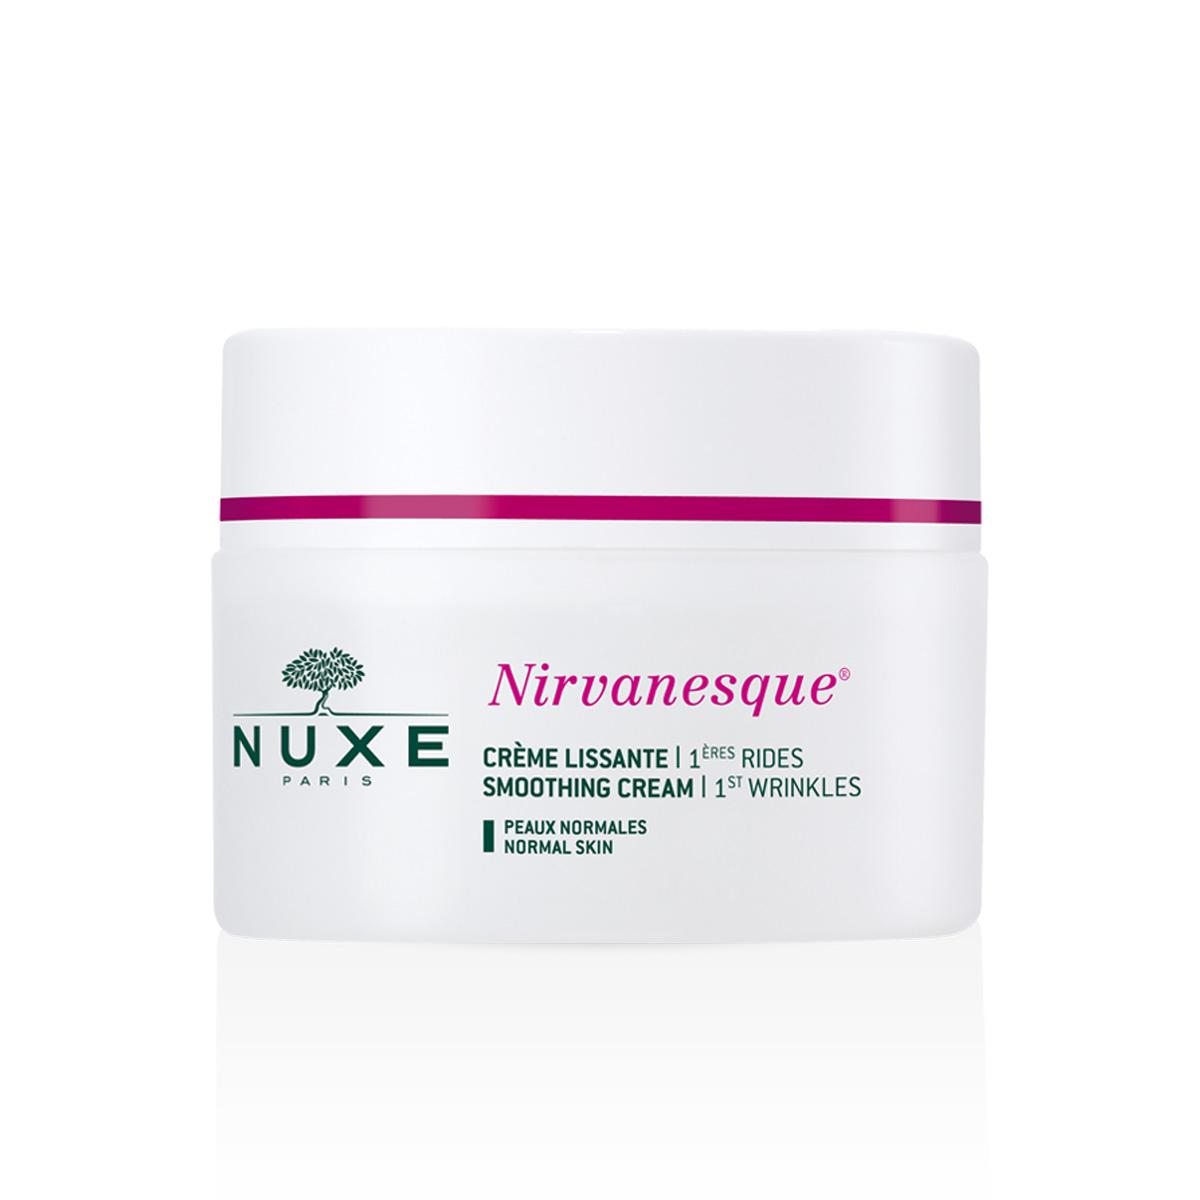 کرم نیروانِسک - Nirvanesque First wrinkle smoothing